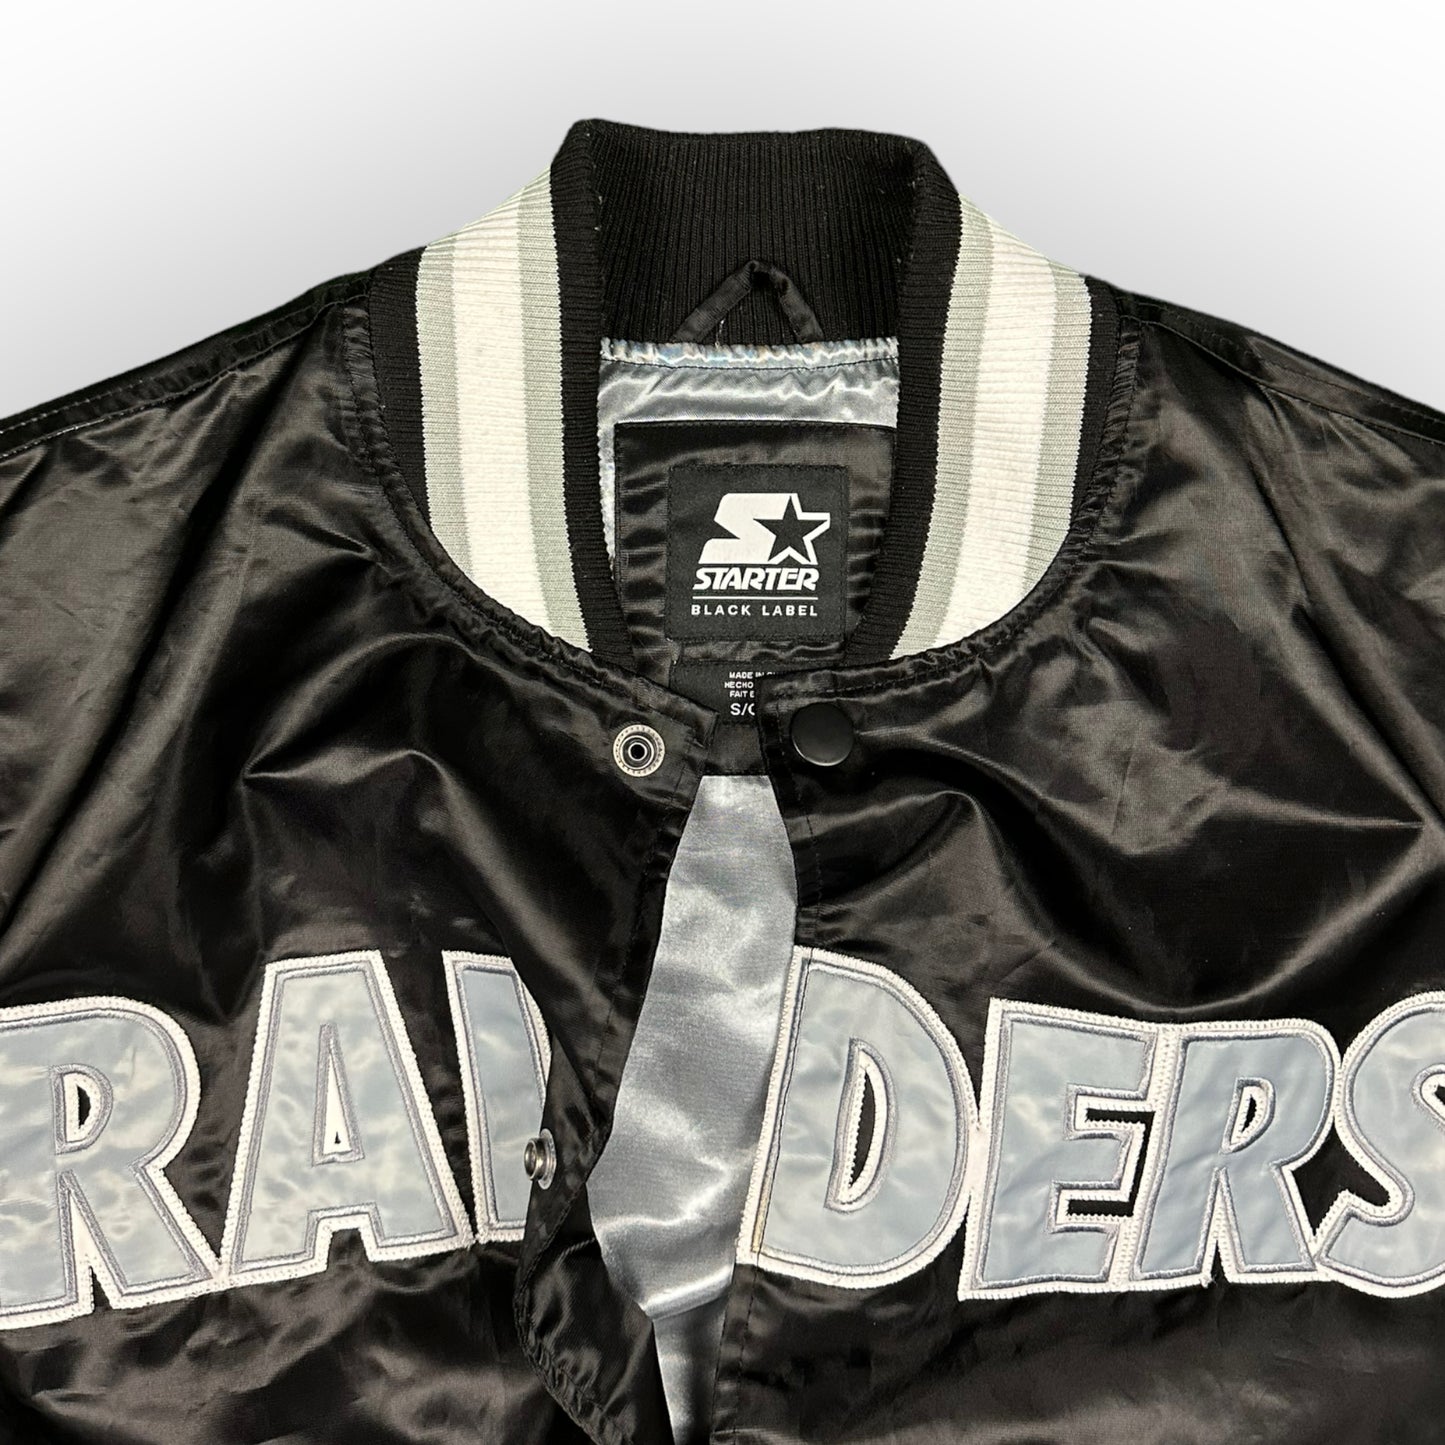 Vintage Starter Raiders Jacket Black Label